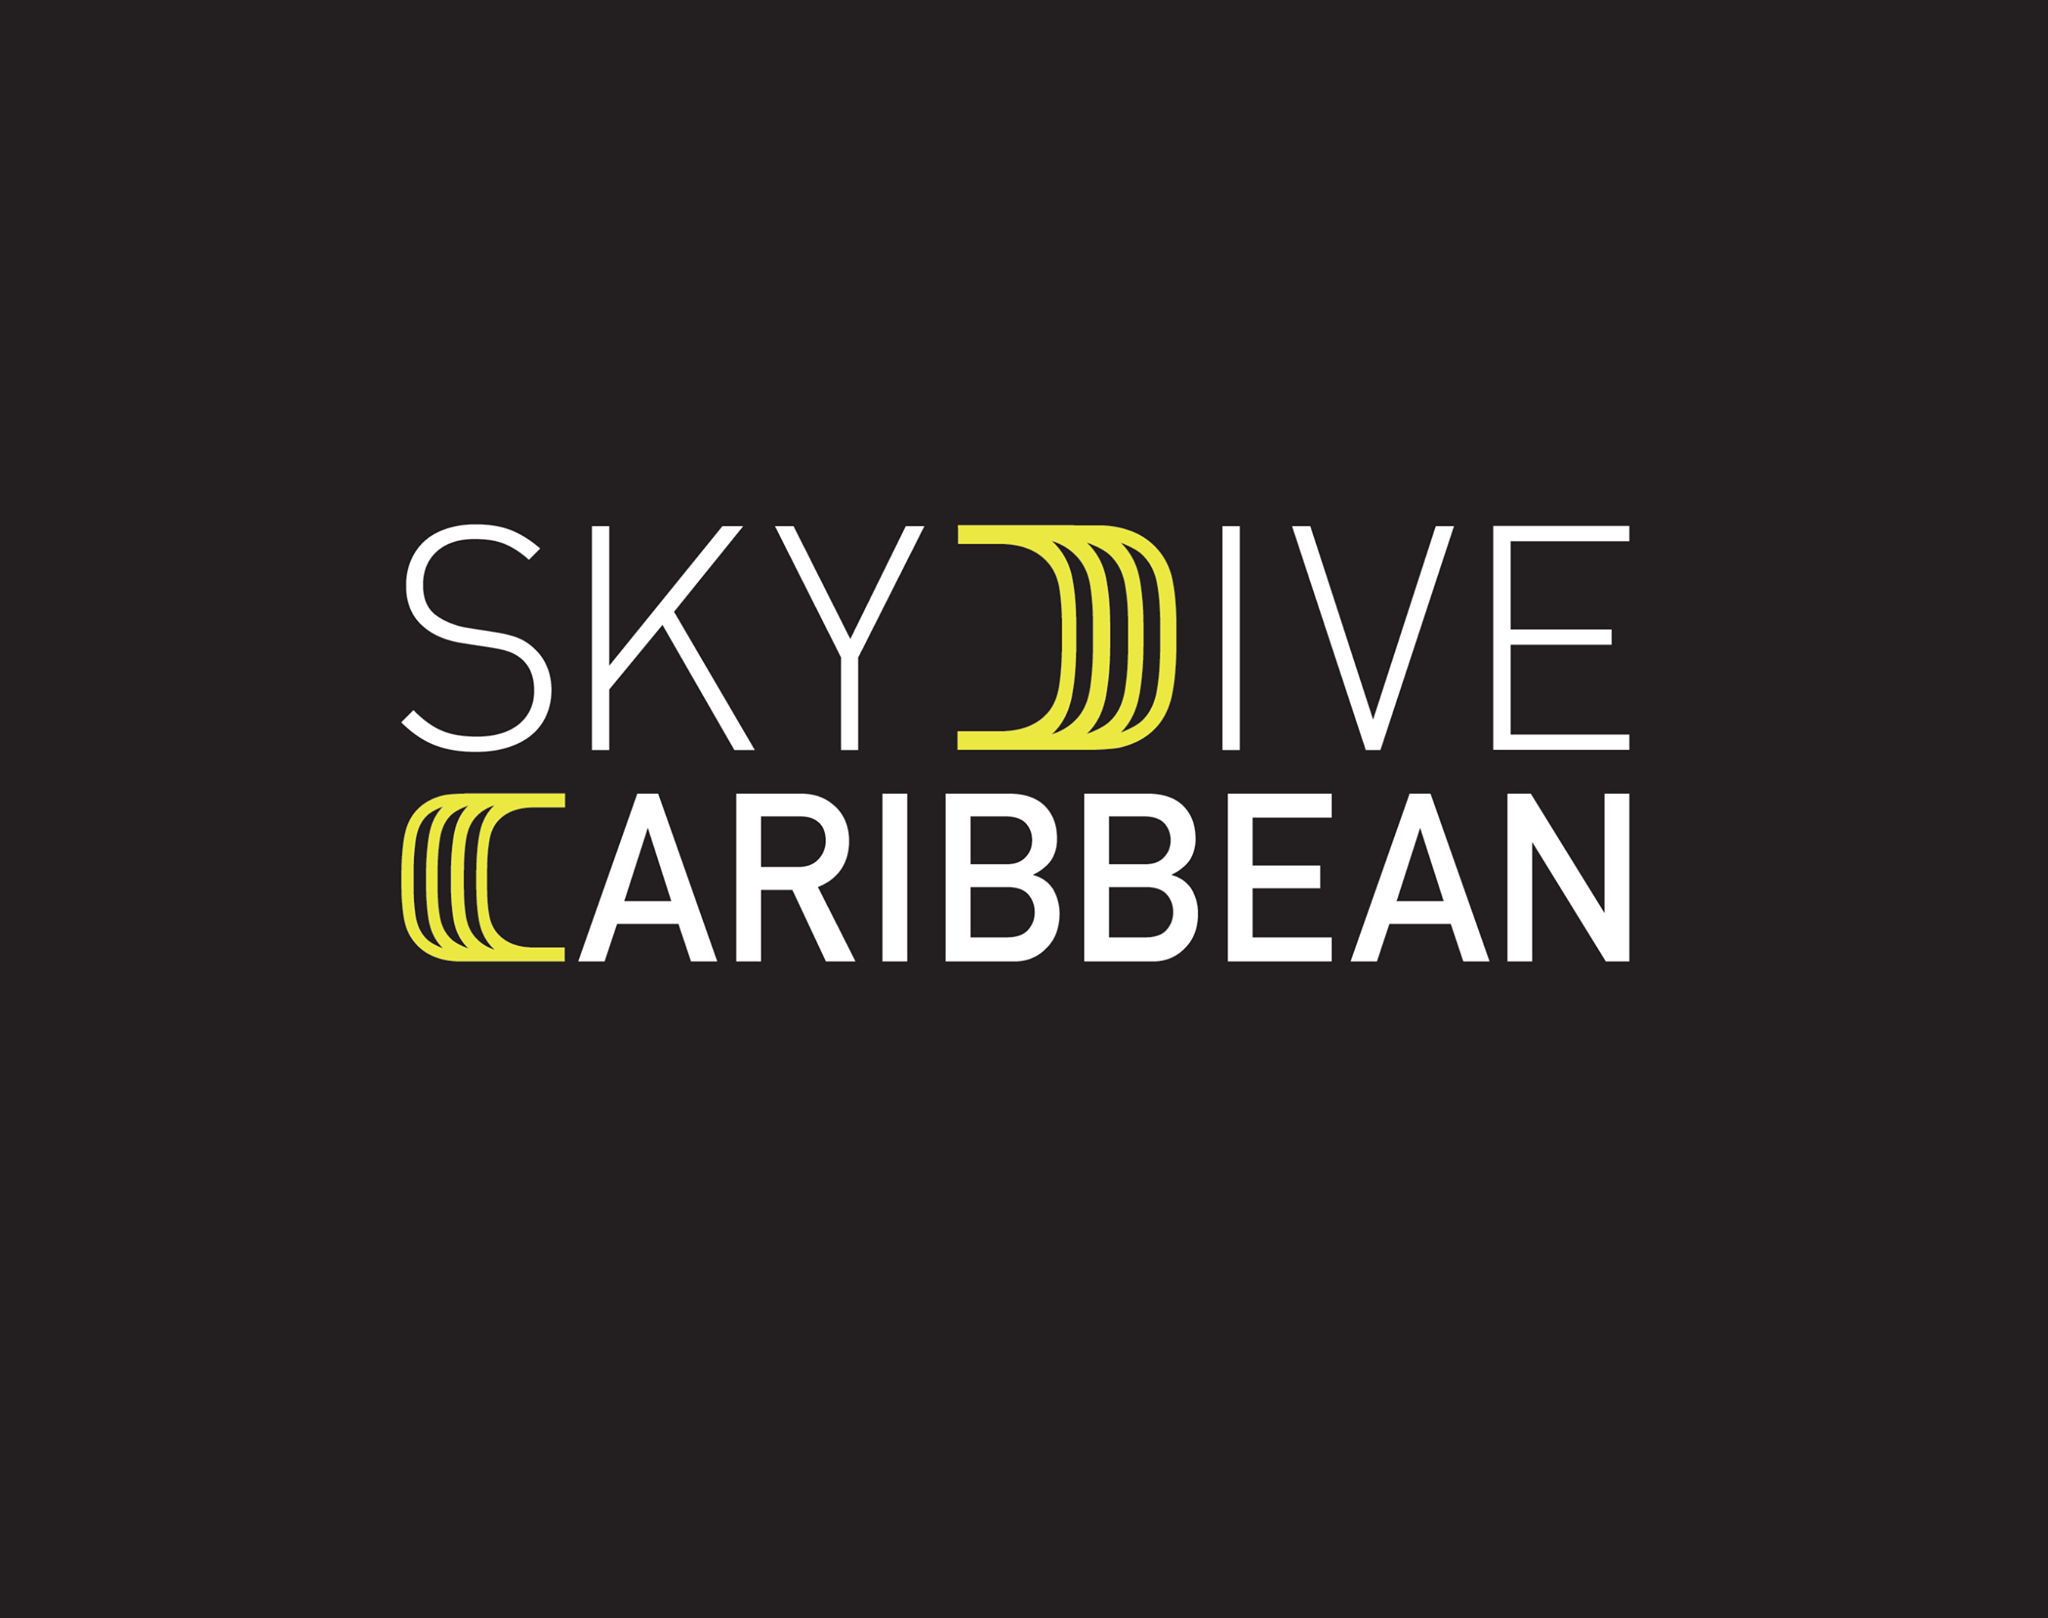 Skydive Caribbean logo